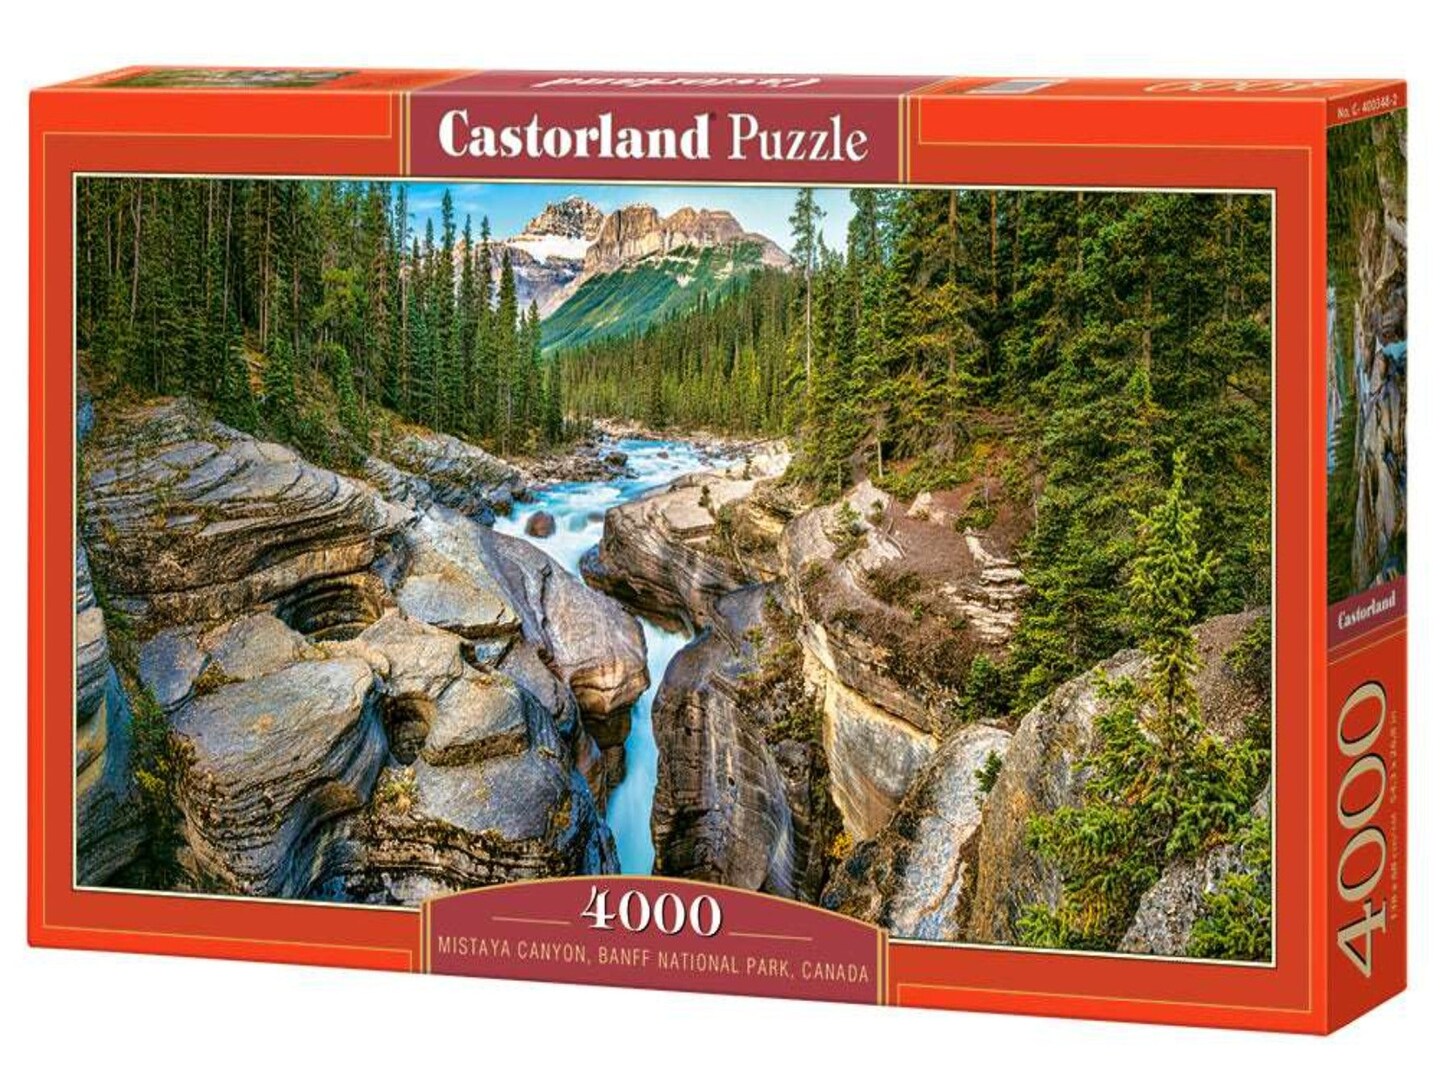 4000 Piece Jigsaw Puzzle, Mistaya Canyon, Banff National Park, Canada, Castorland C-400348-2